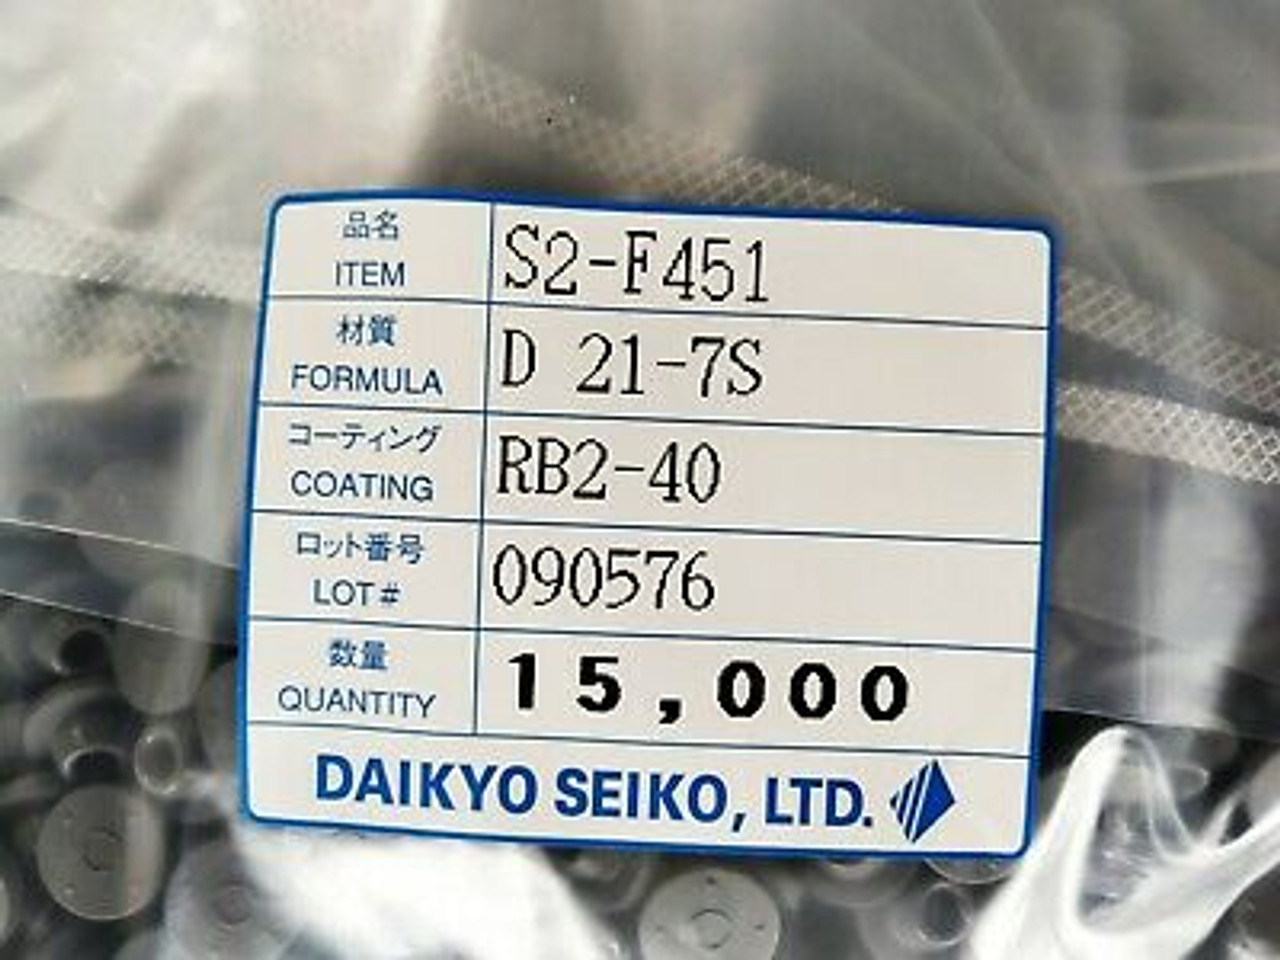 Daikyo Seiko S2-F451 Rubber Stopper - SPW Industrial